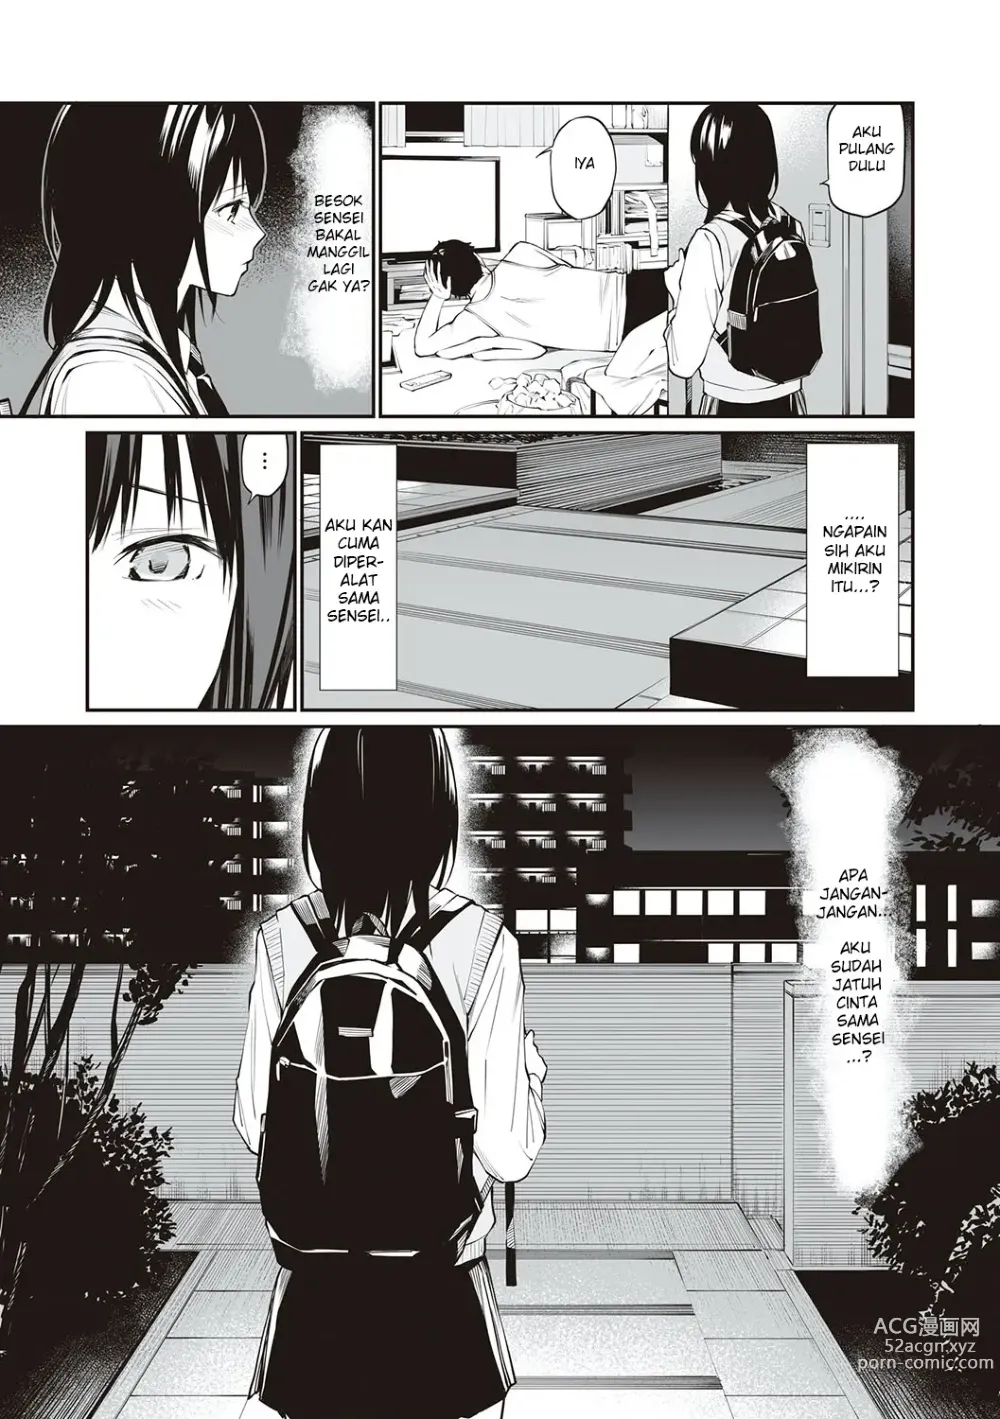 Page 22 of manga Asalkan sama Sensei